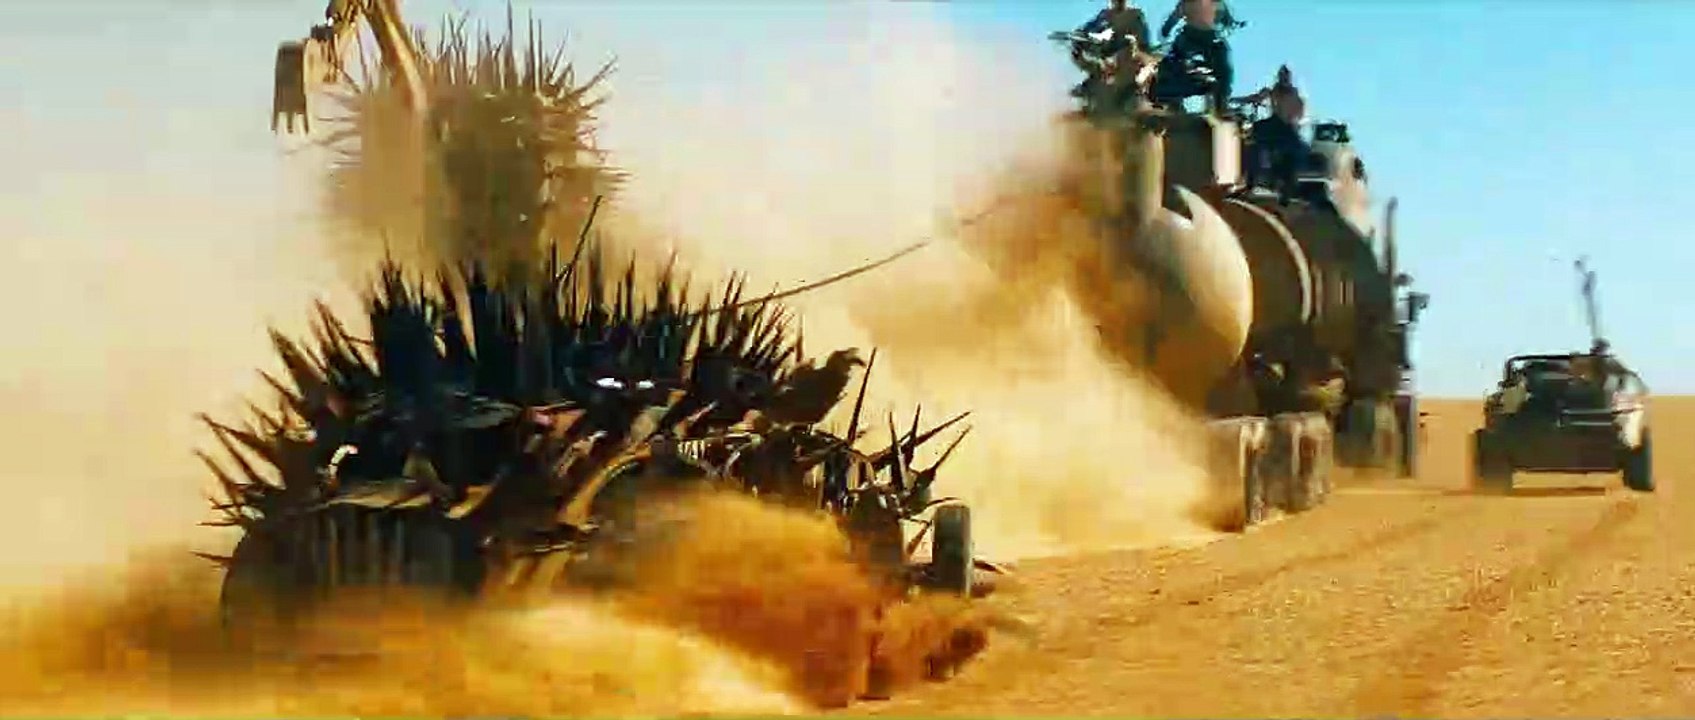 Mad Max: Fury Road Trailer (2) DF